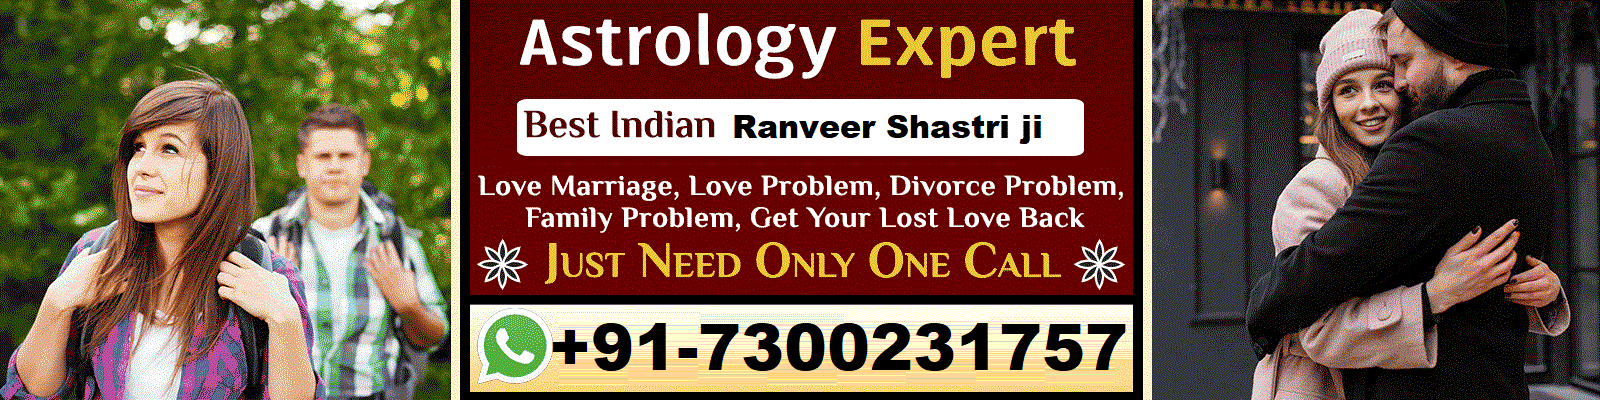 Astrologer Ranveer Shastri ji +91-7300231757